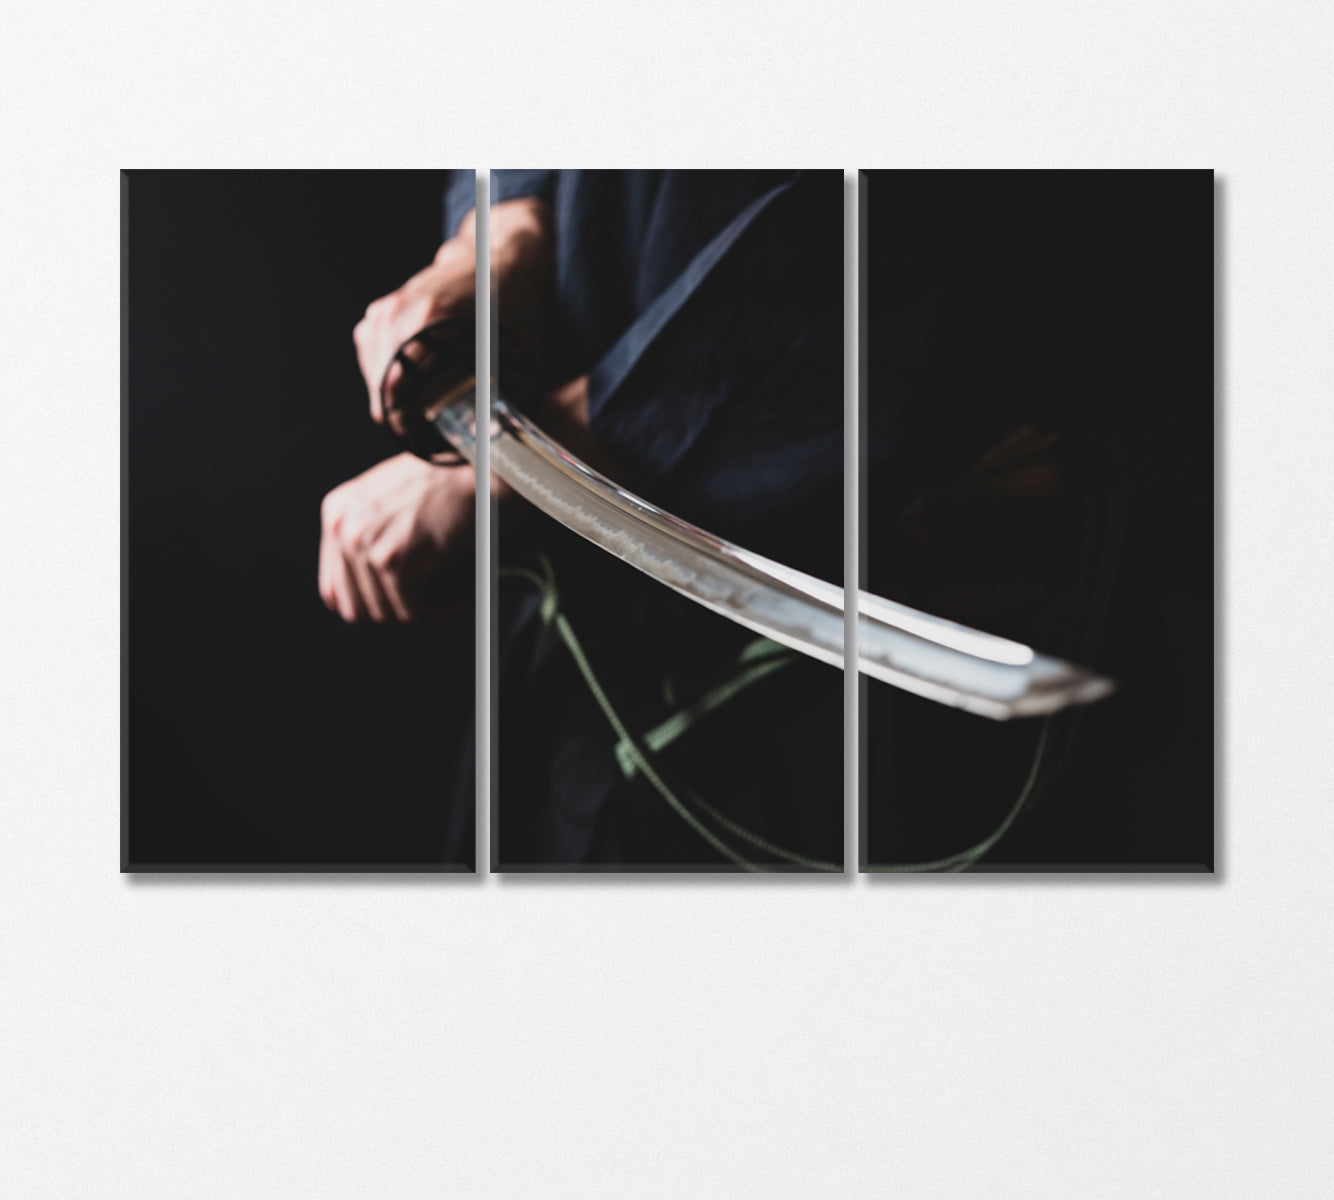 Japanese Sword in Samurai Hands Canvas Print-Canvas Print-CetArt-3 Panels-36x24 inches-CetArt